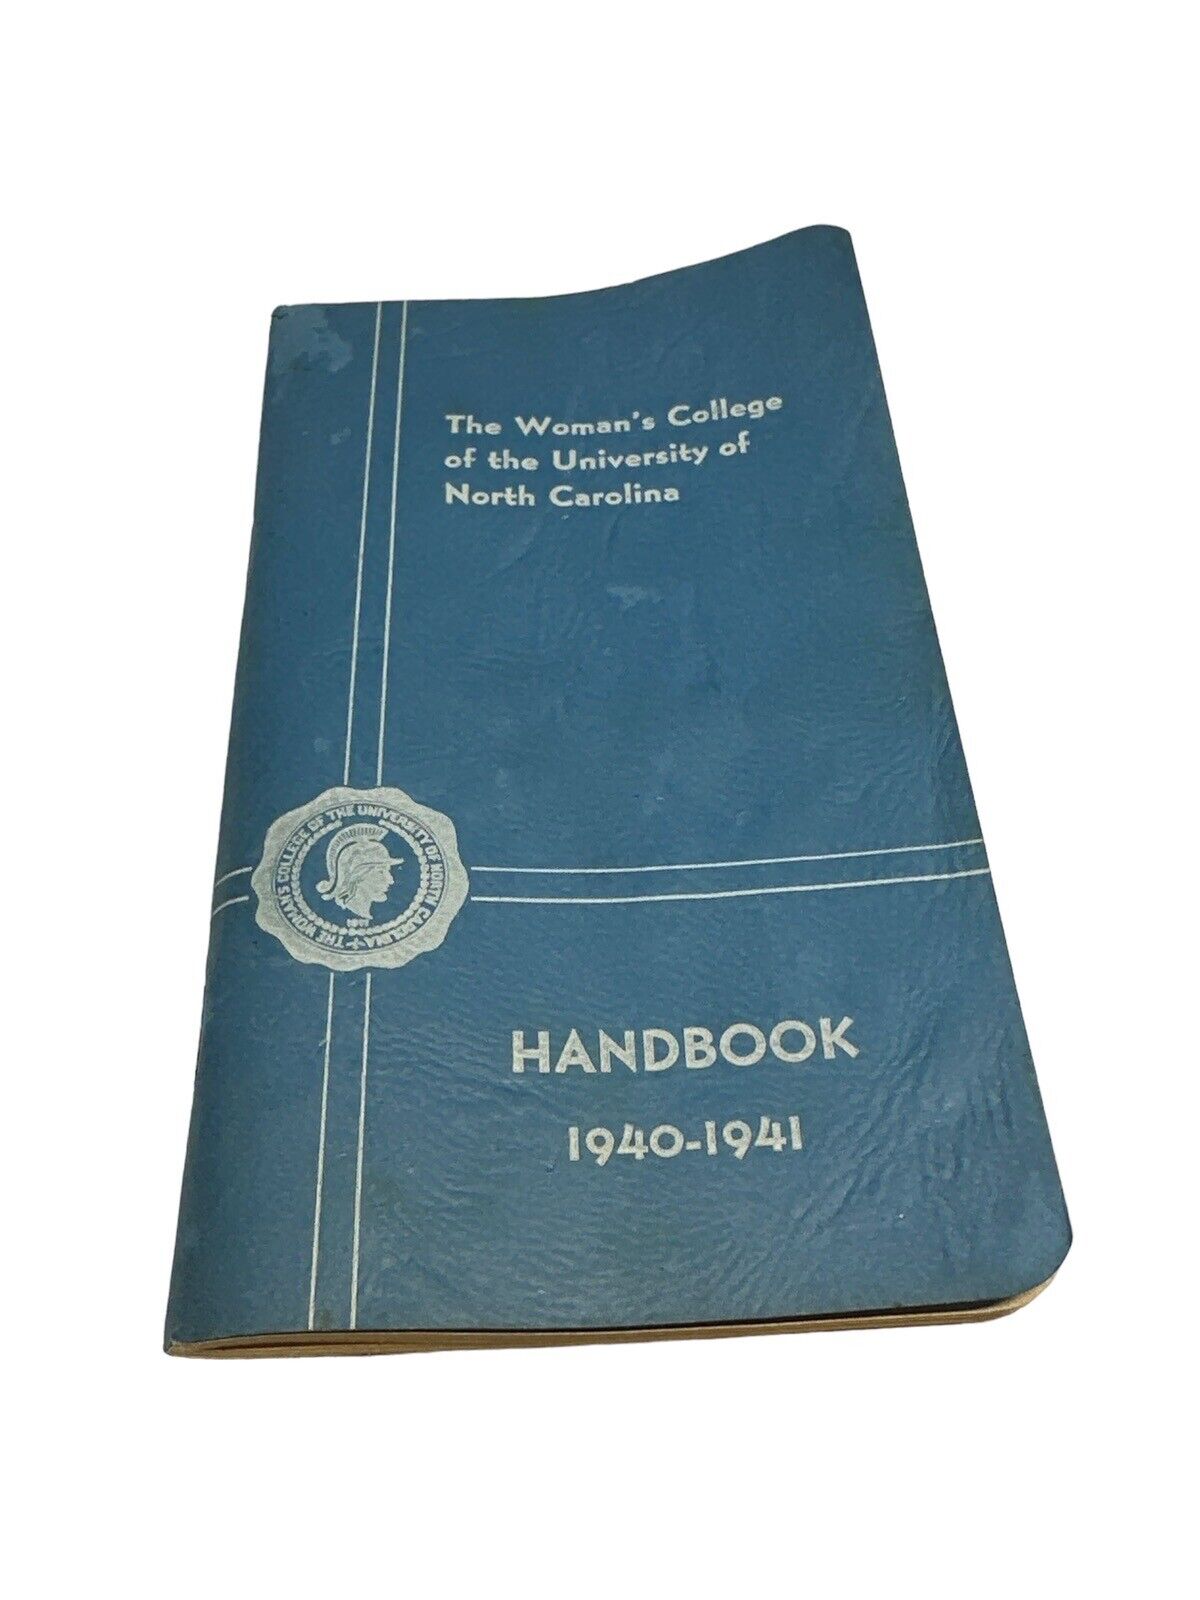 Vintage 1940-1941 Women’s College Of The University Of North Carolina Handbook